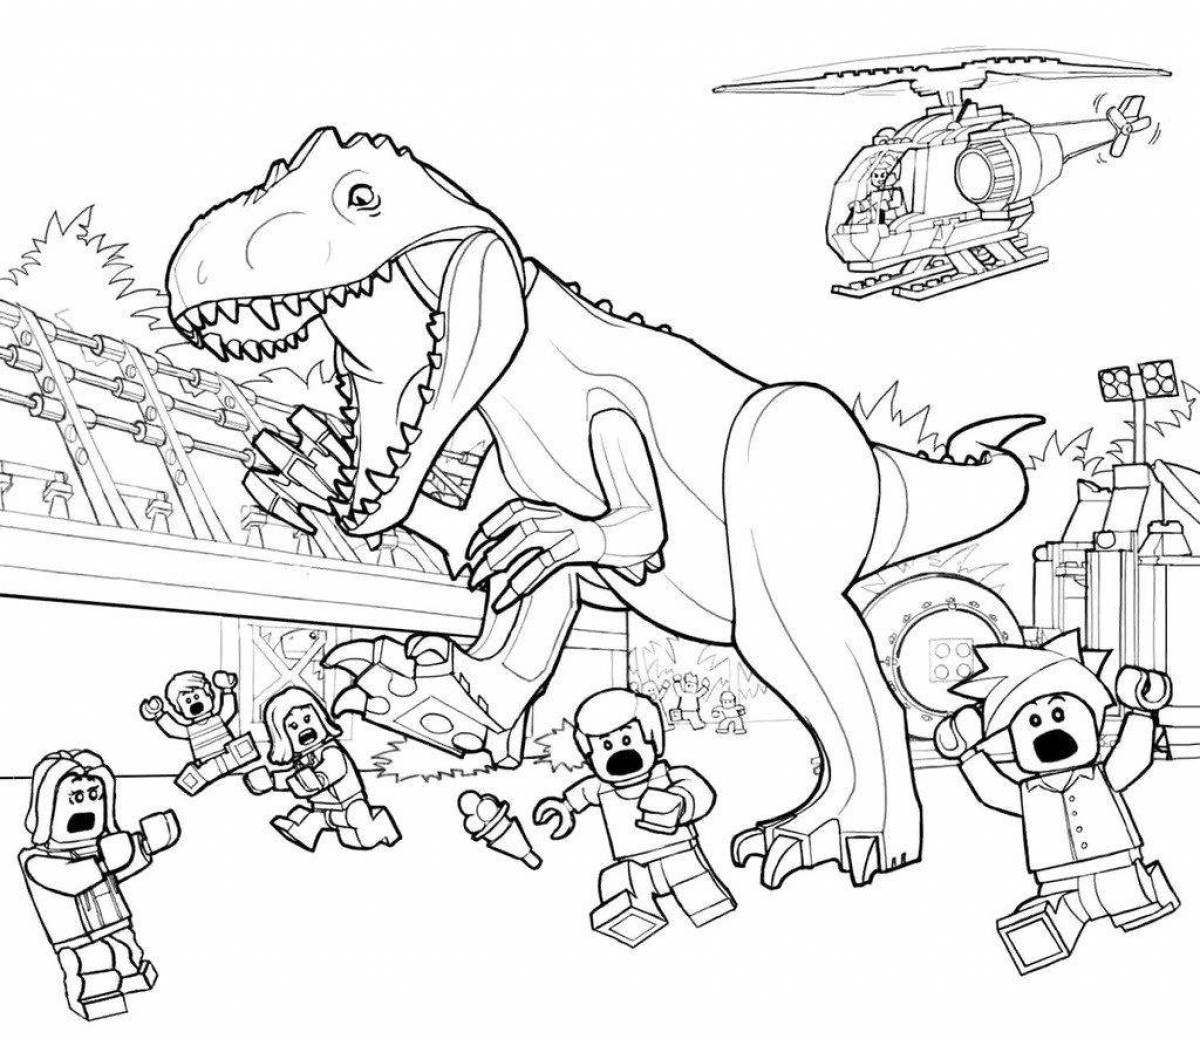 Jurassic world fun coloring book